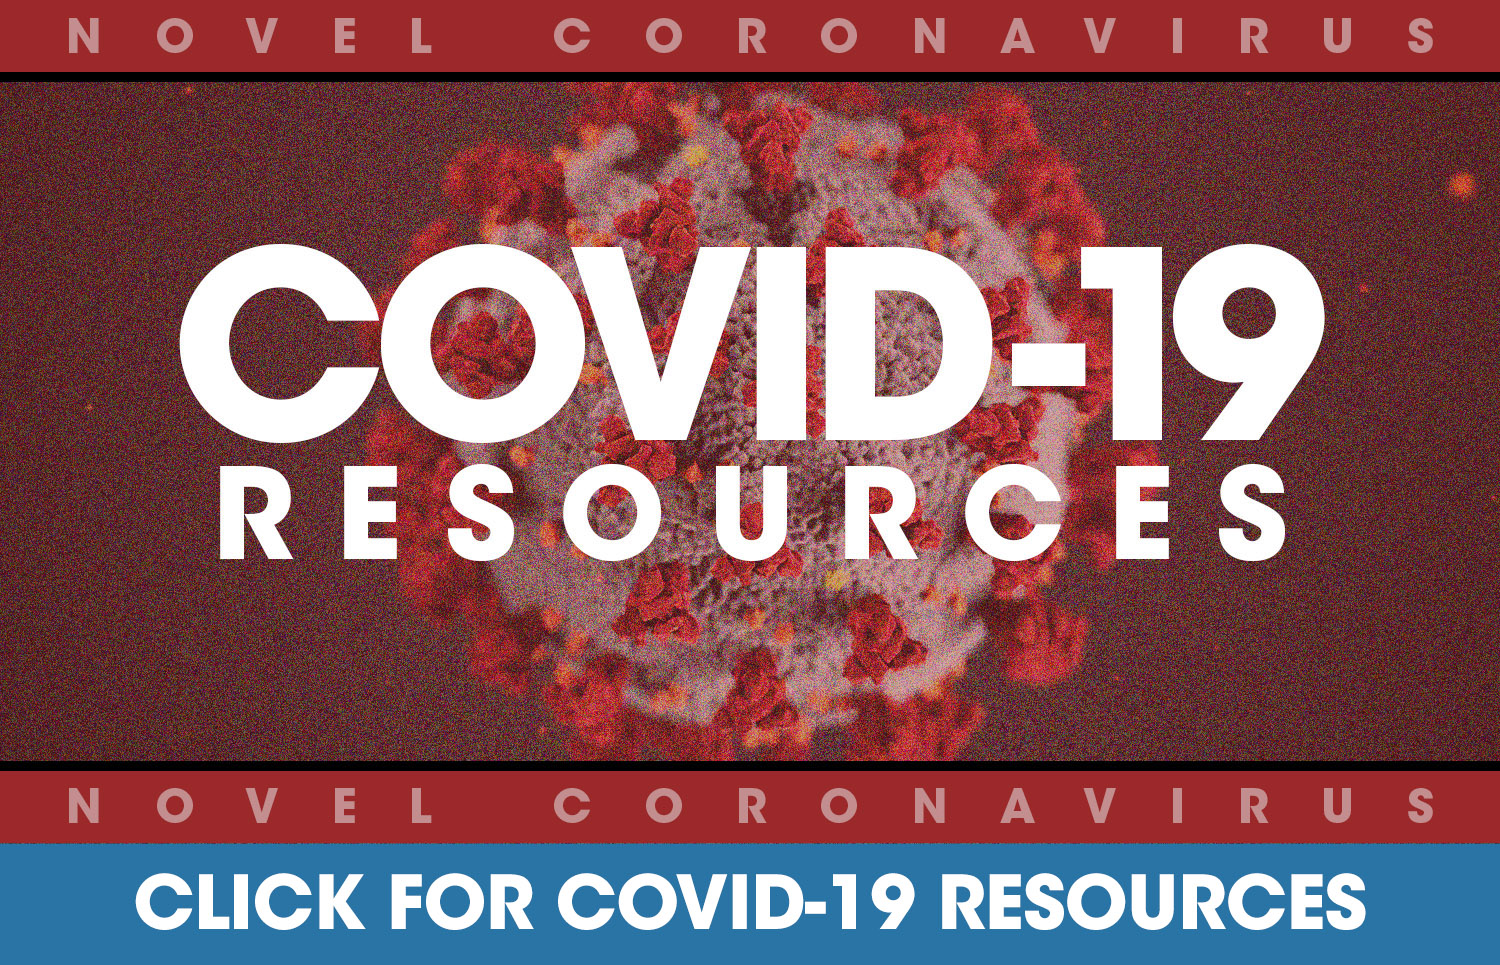 COVID-19 RESOURCES